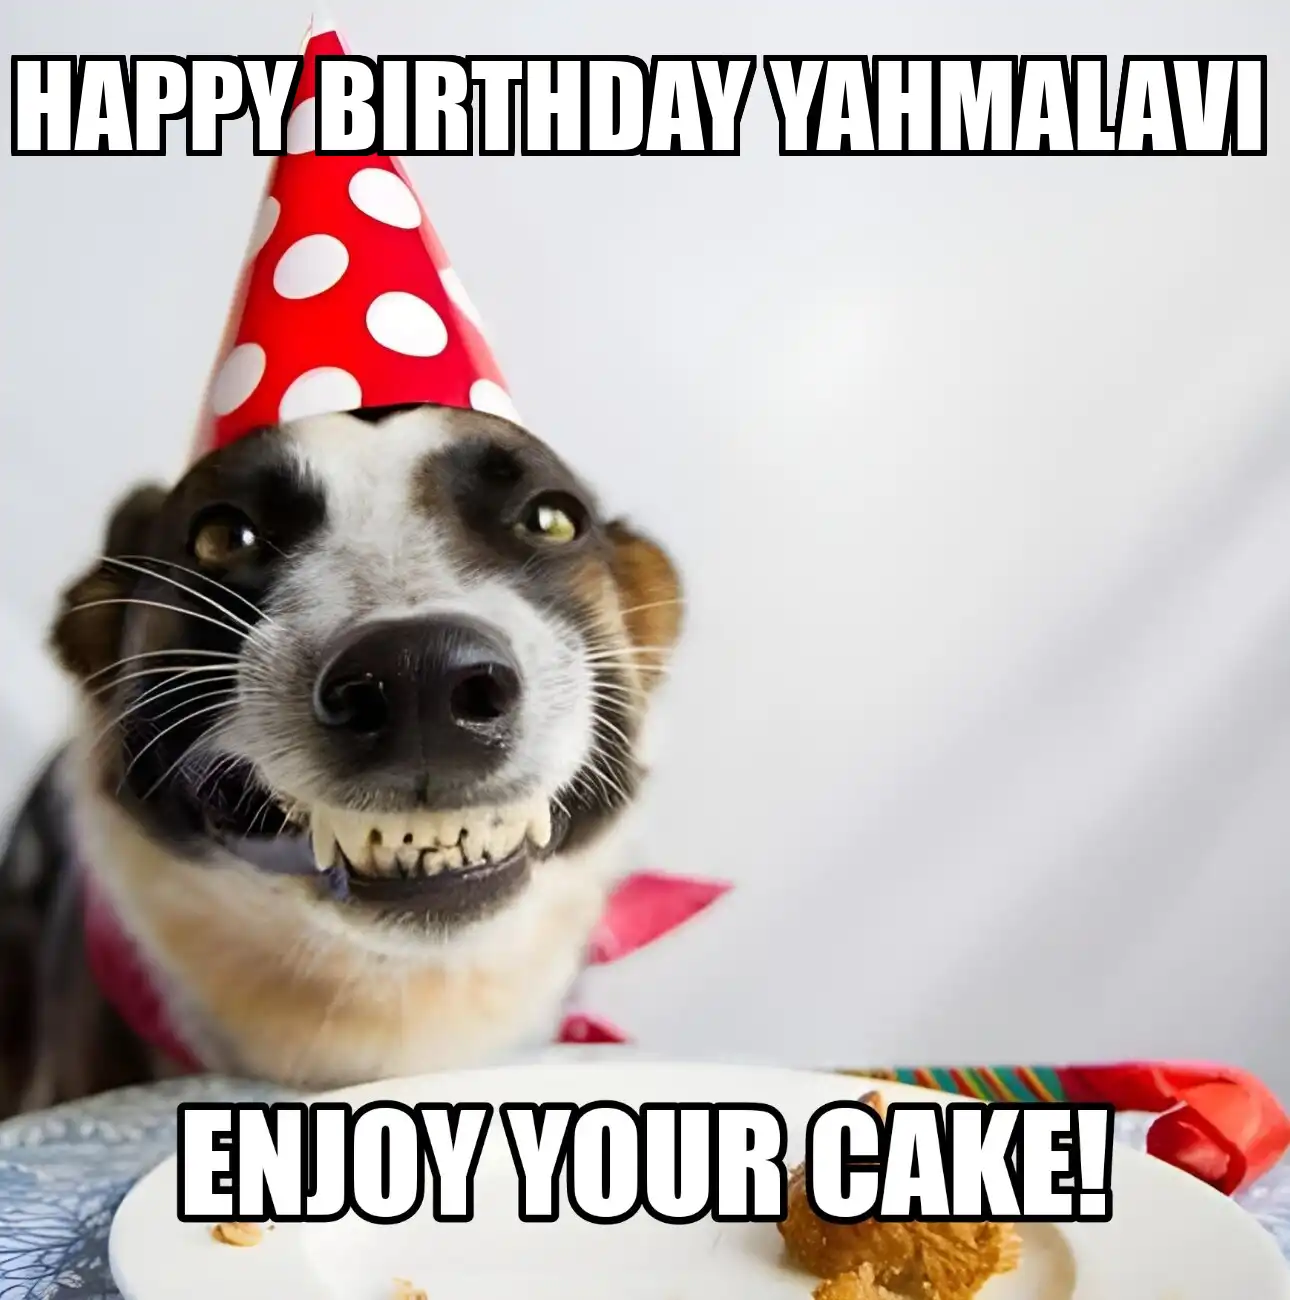 Happy Birthday Yahmalavi Enjoy Your Cake Dog Meme